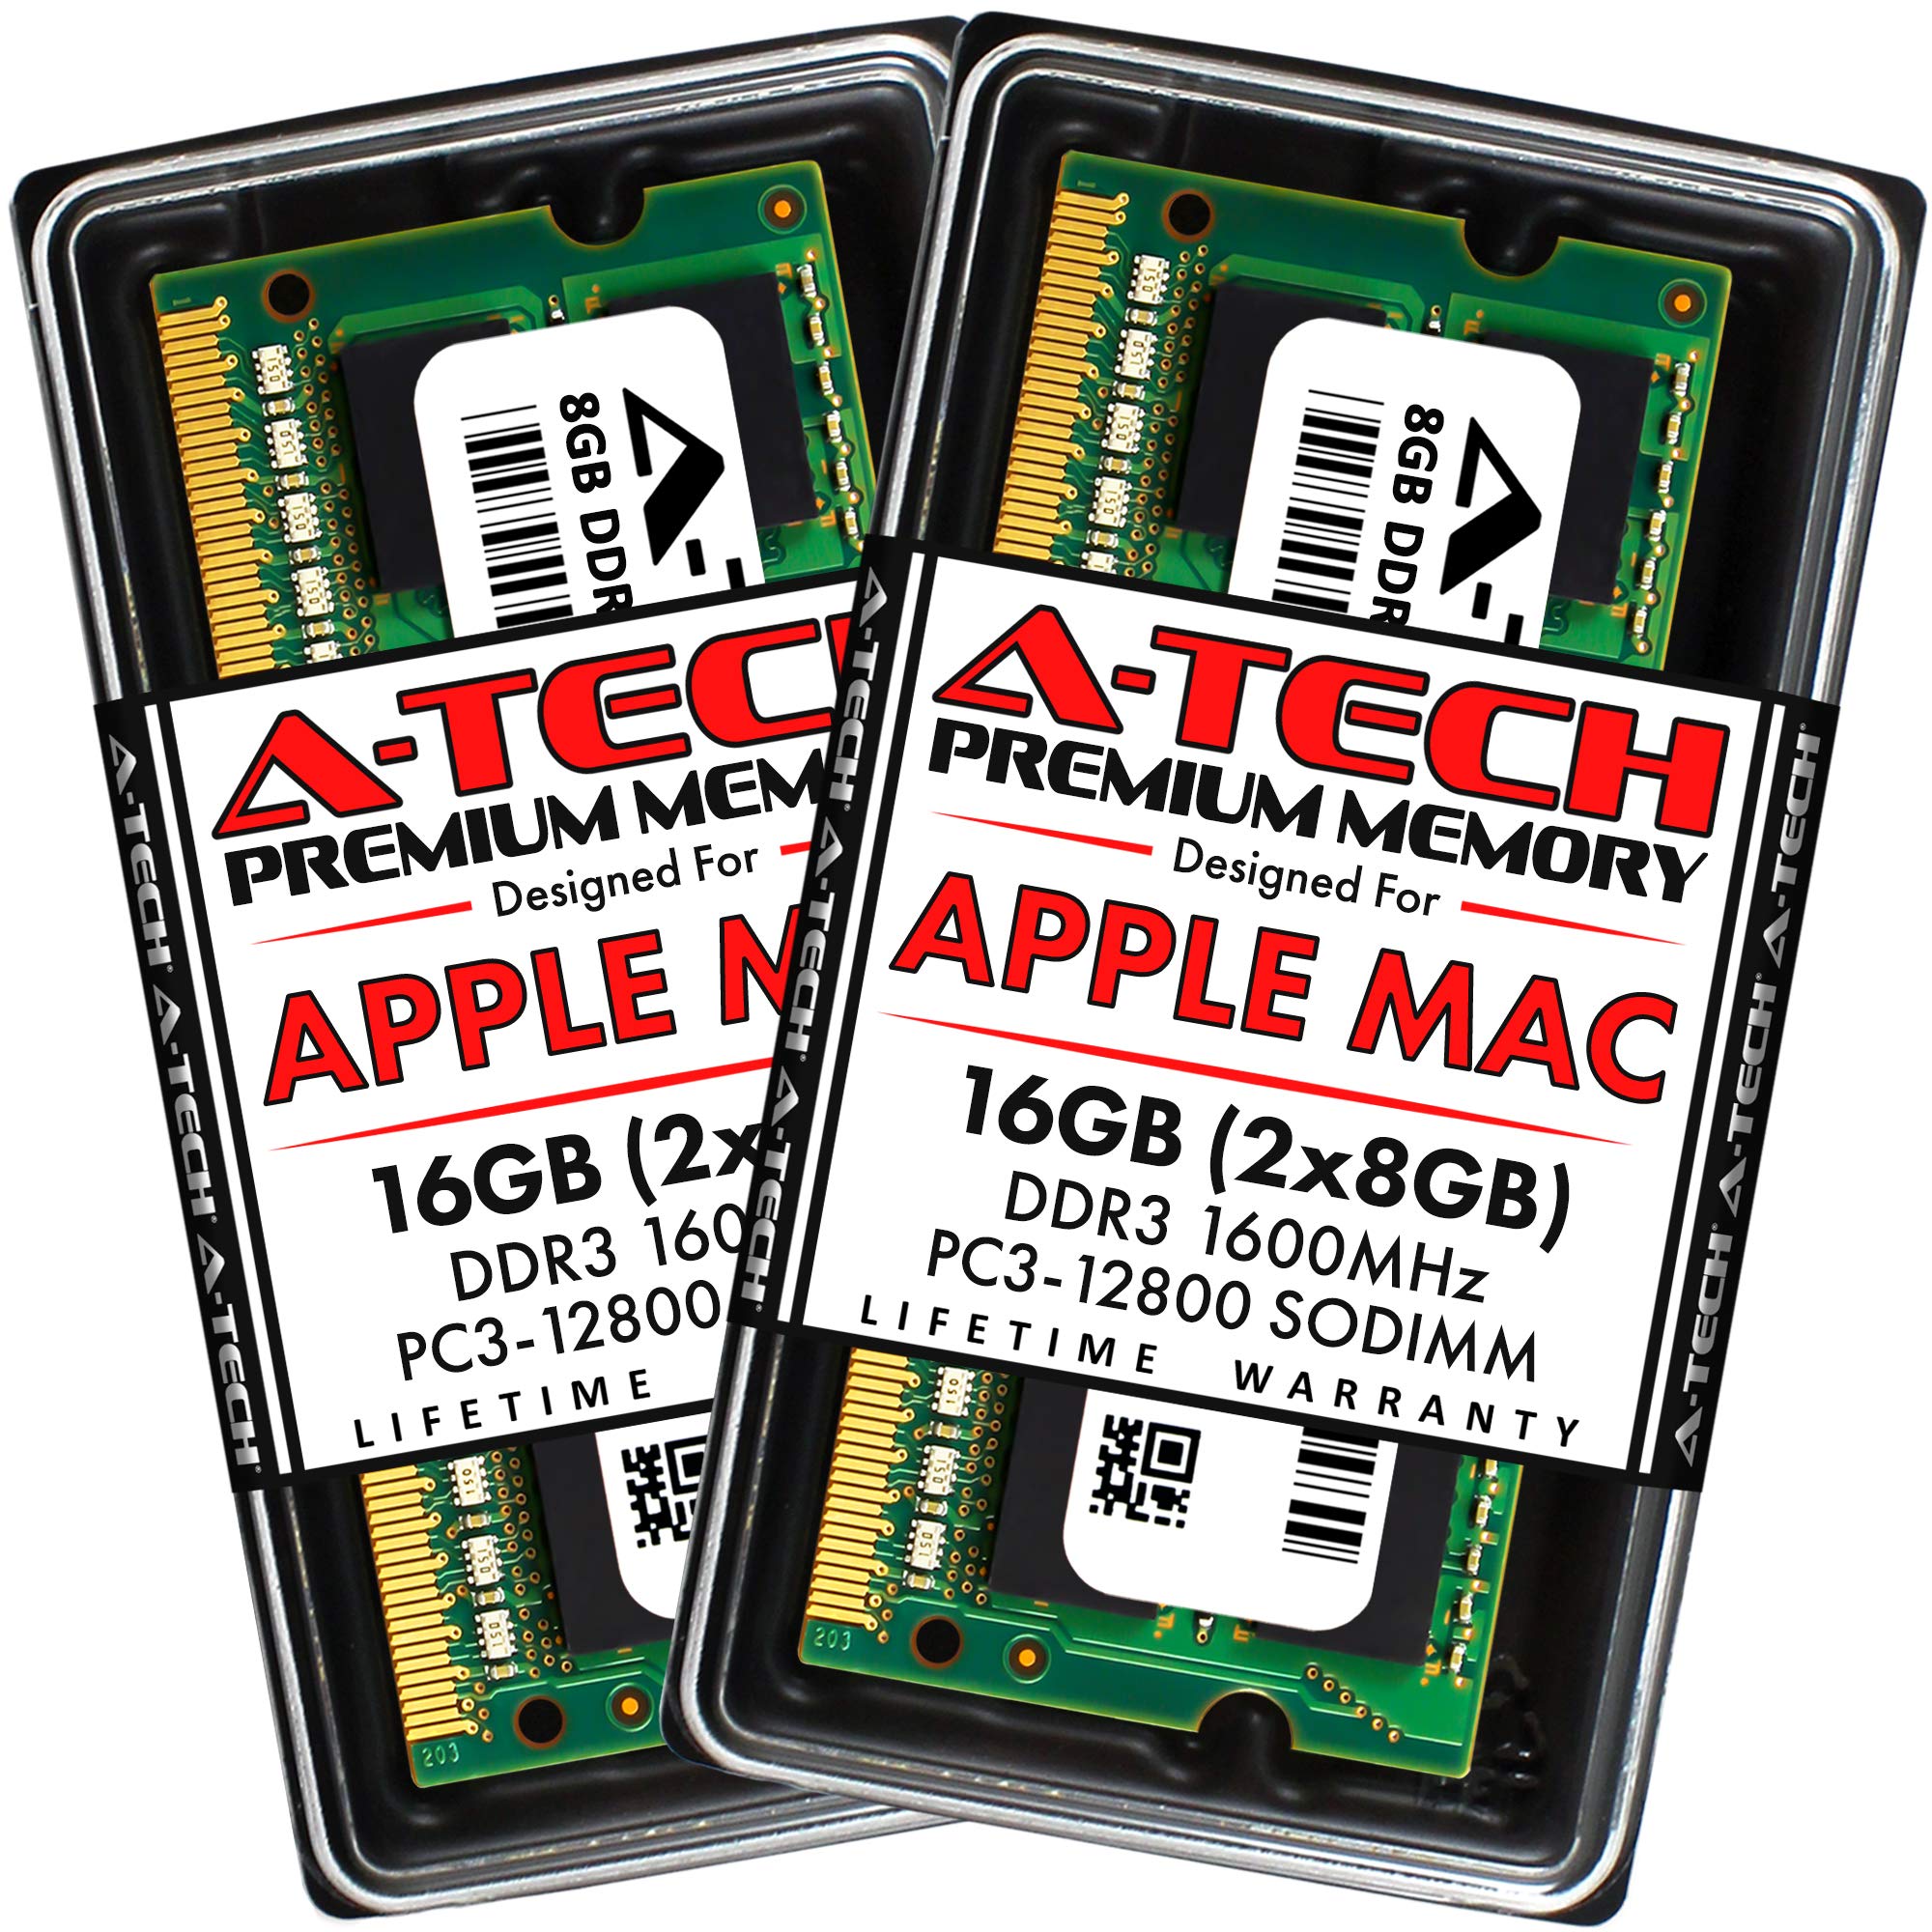 macbook pro mid 2012 memory upgrade 16gb